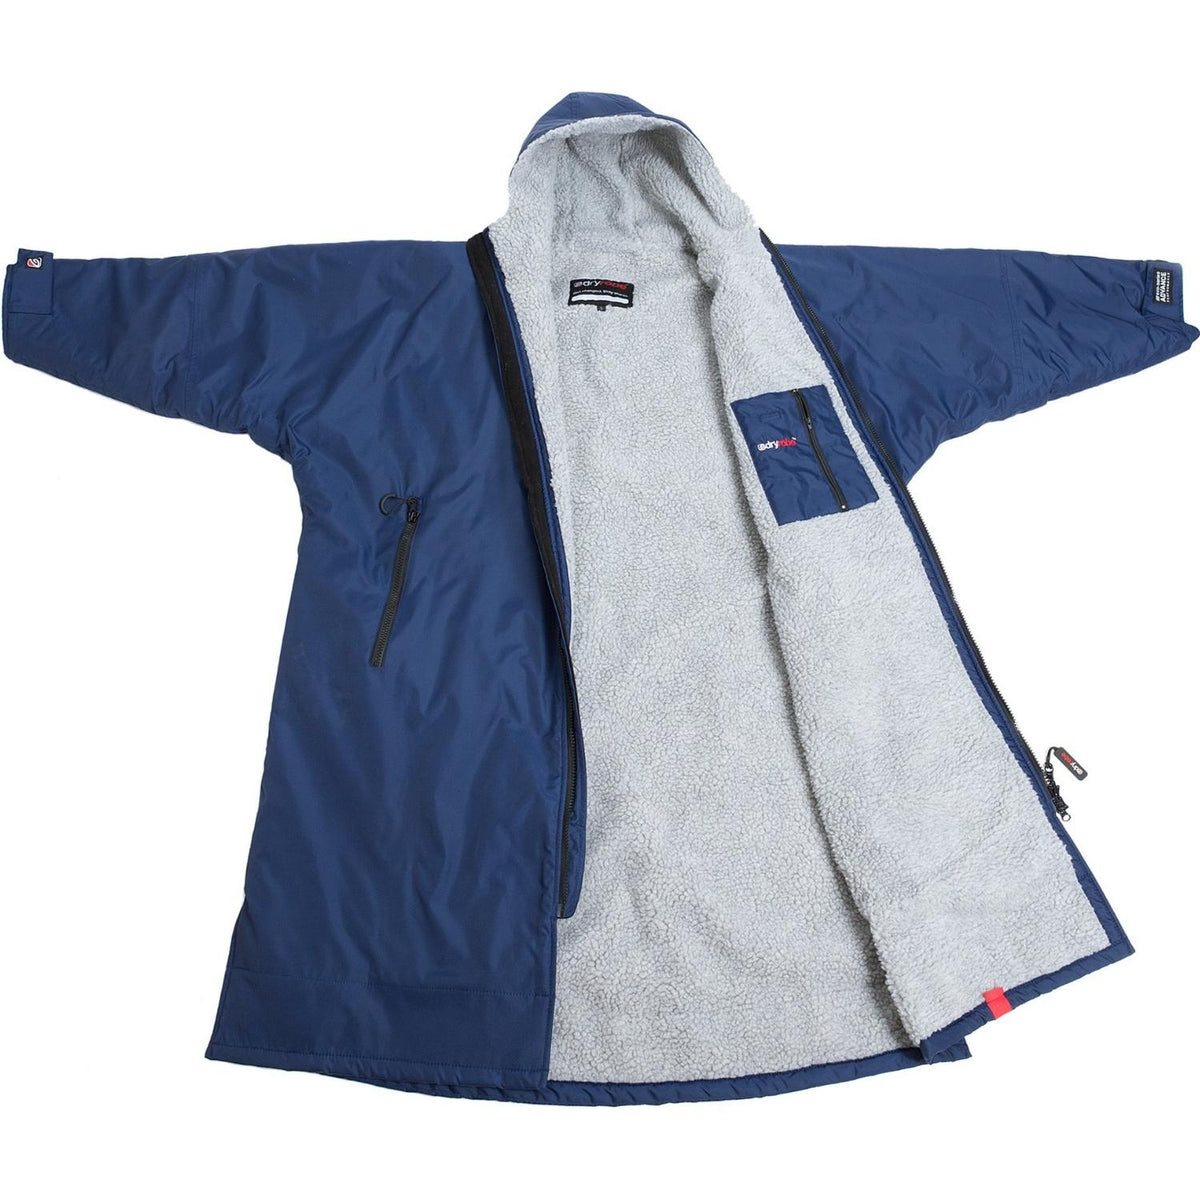 Dryrobe Advance Long Sleeve Drying &amp; Changing Robe - Navy Blue/Grey - Changing Robe Poncho Towel by Dryrobe